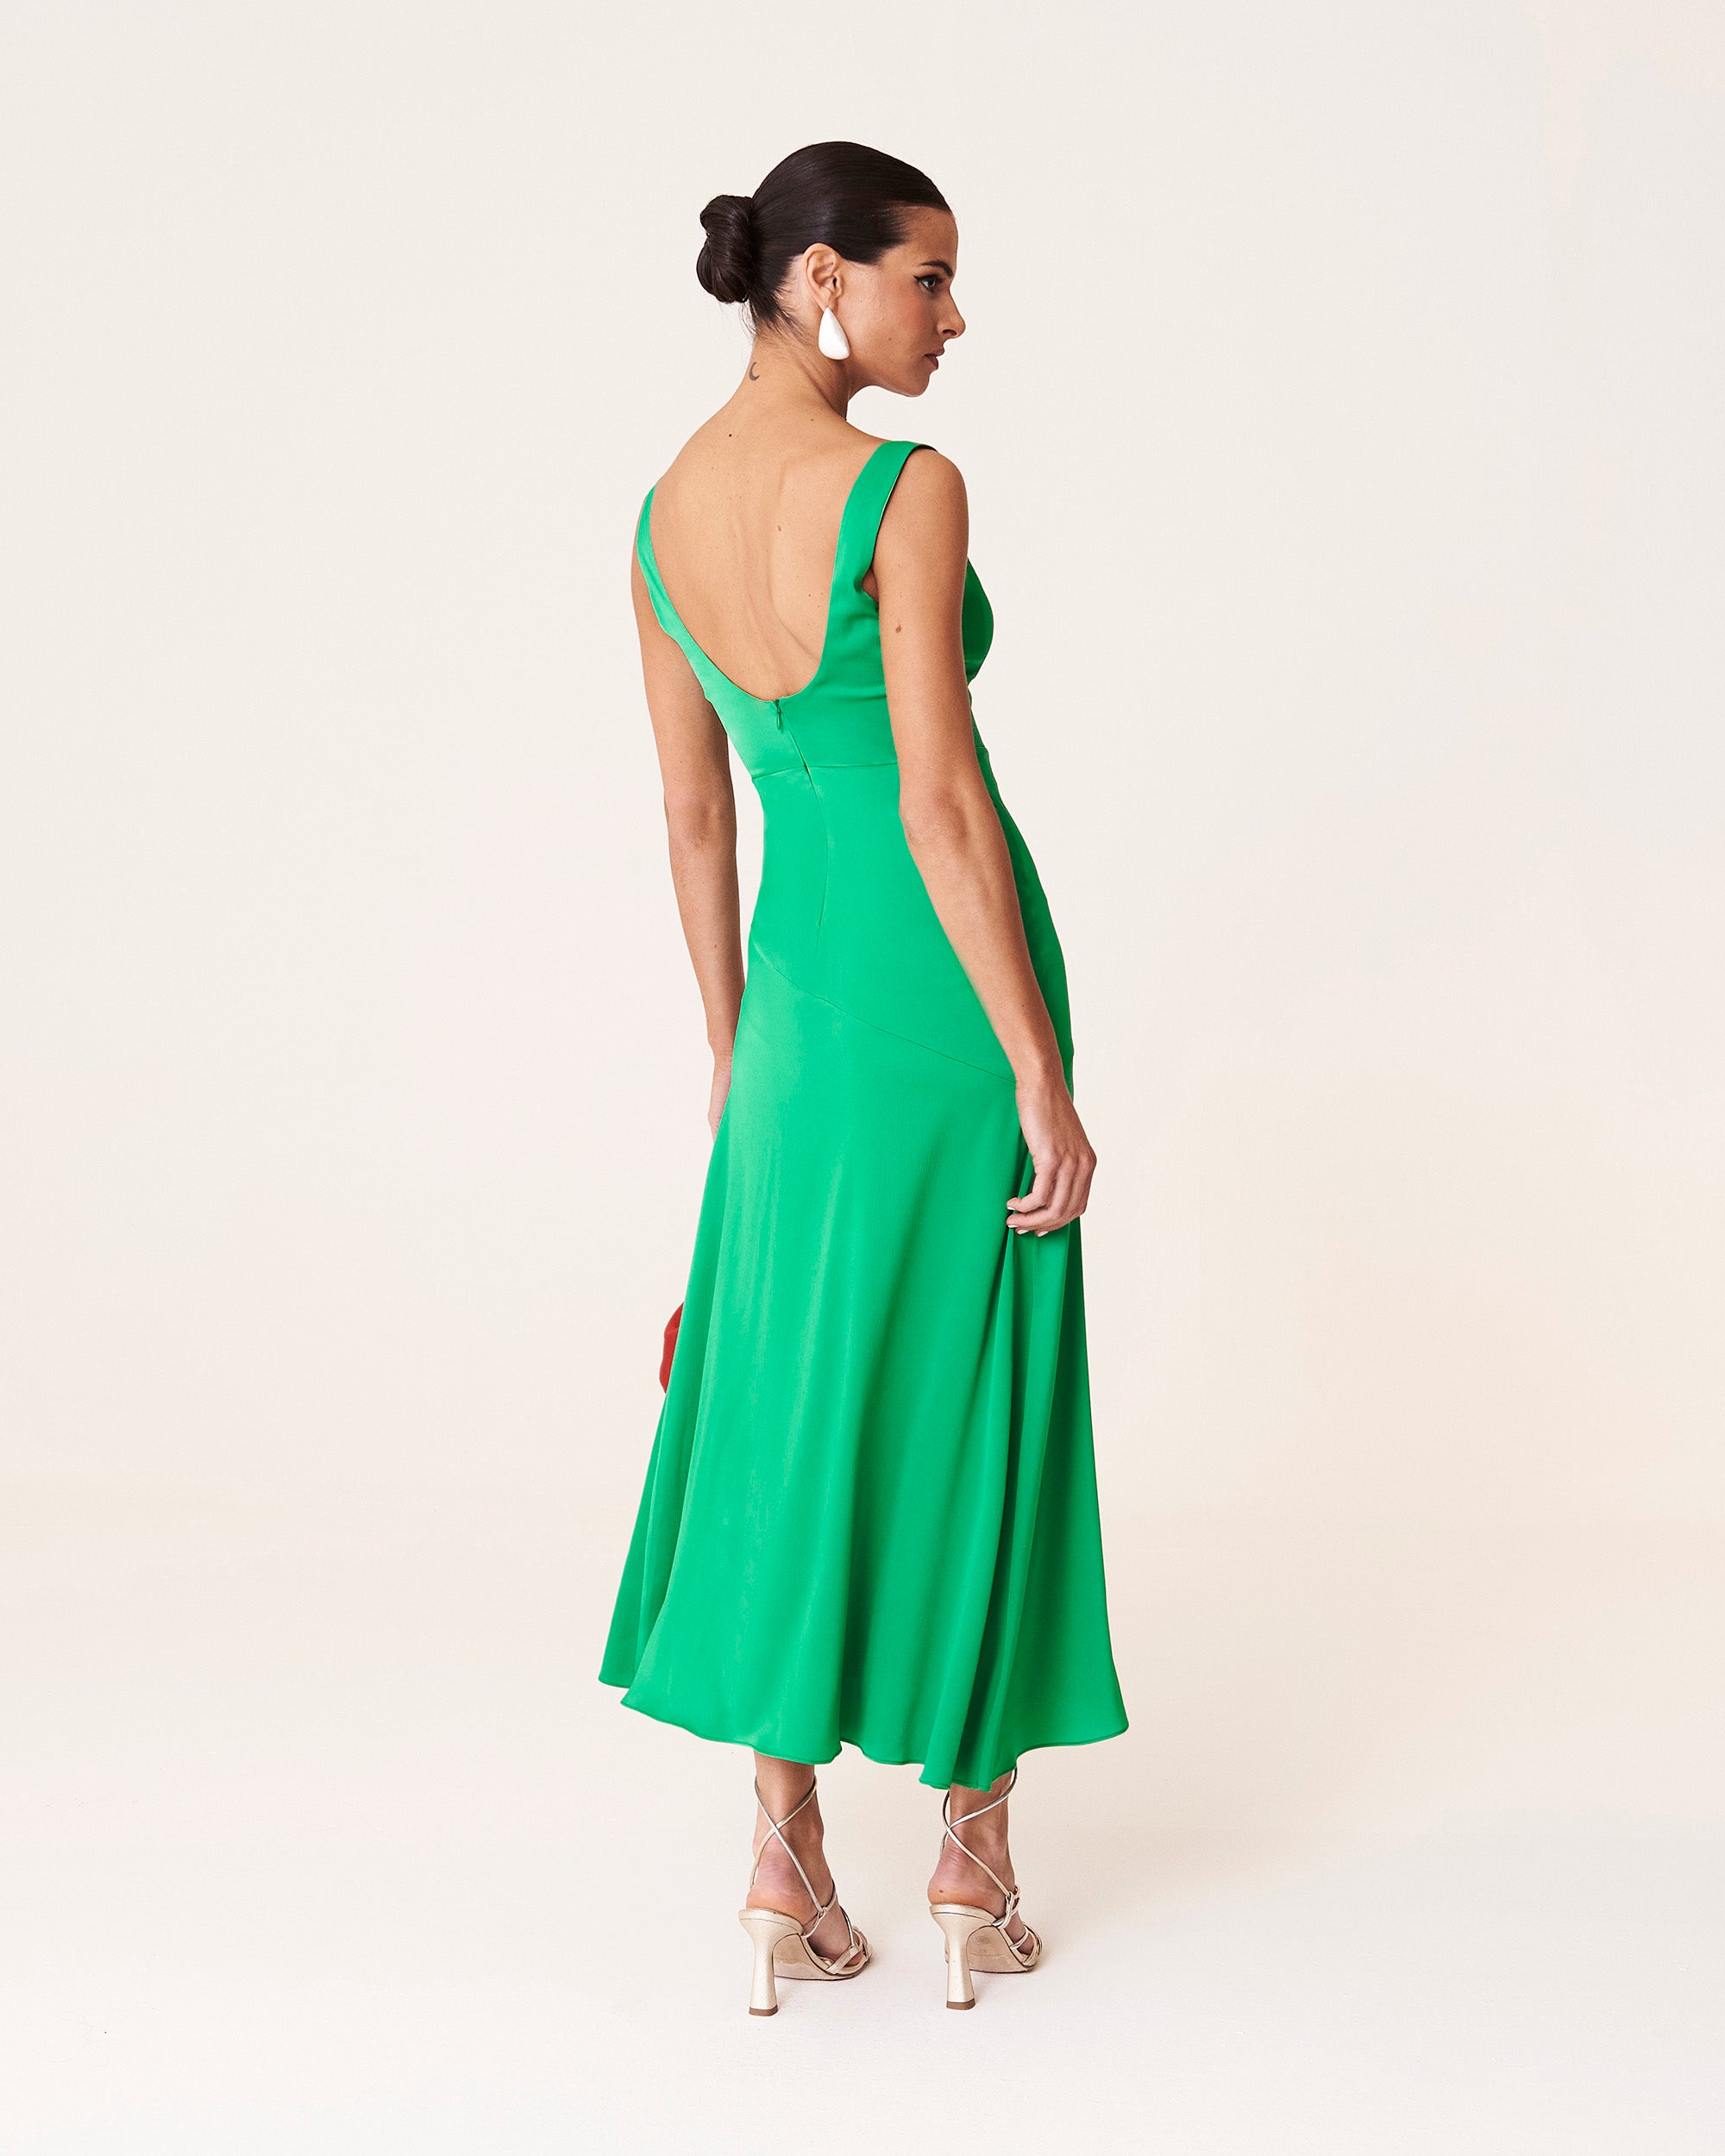 Zahira Green Dress